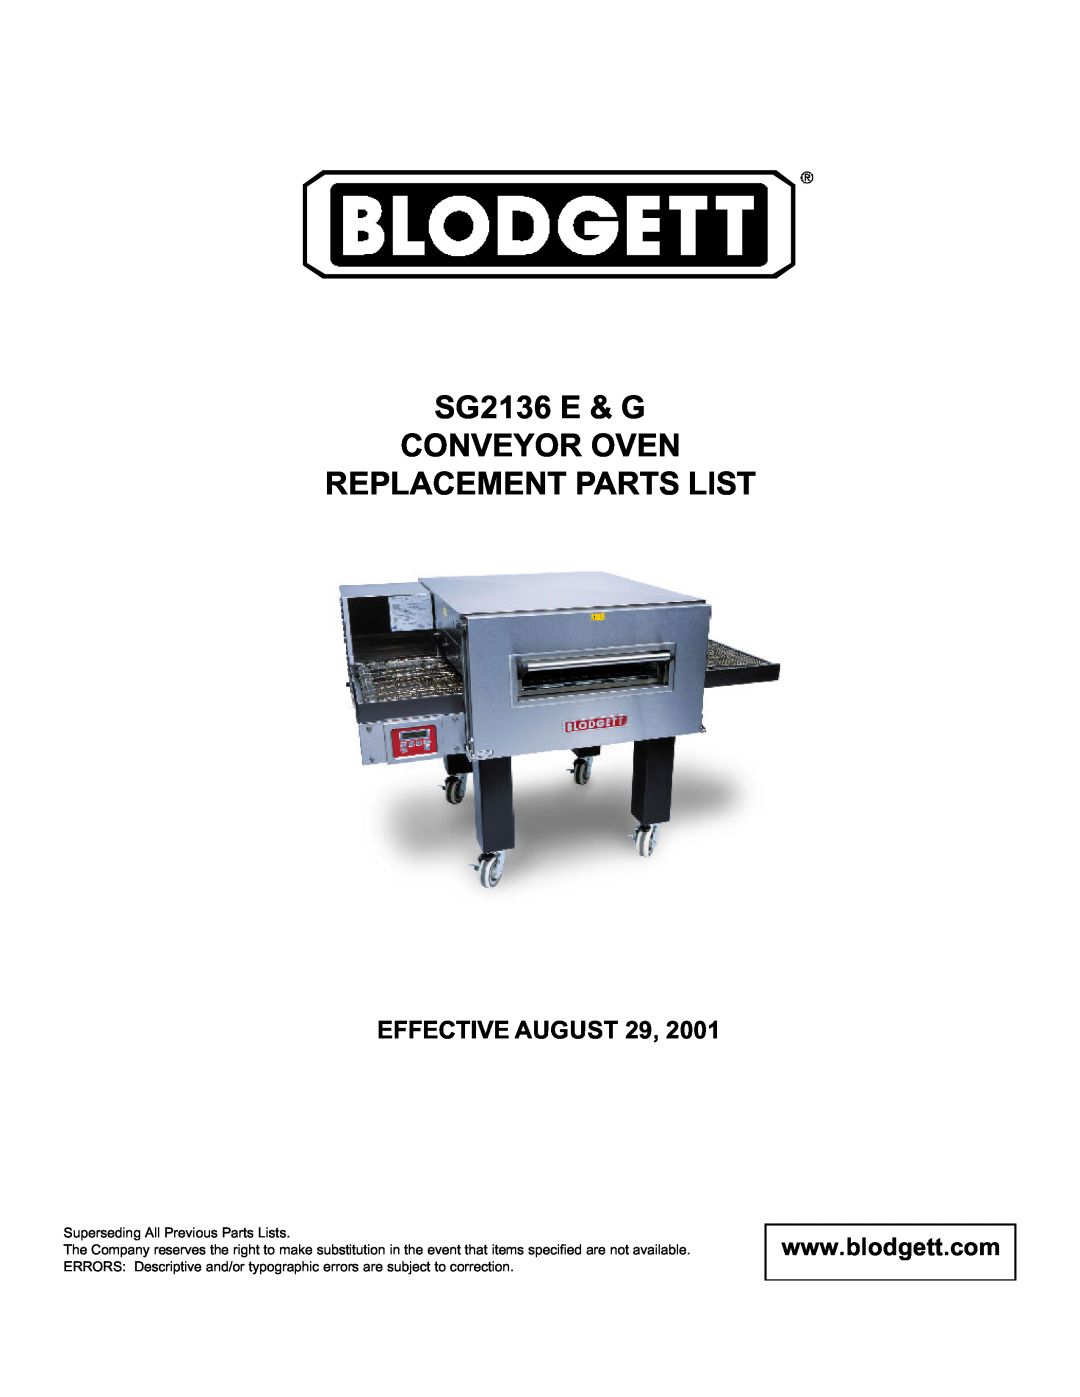 Blodgett manual SG2136 E & G CONVEYOR OVEN REPLACEMENT PARTS LIST, Effective August 